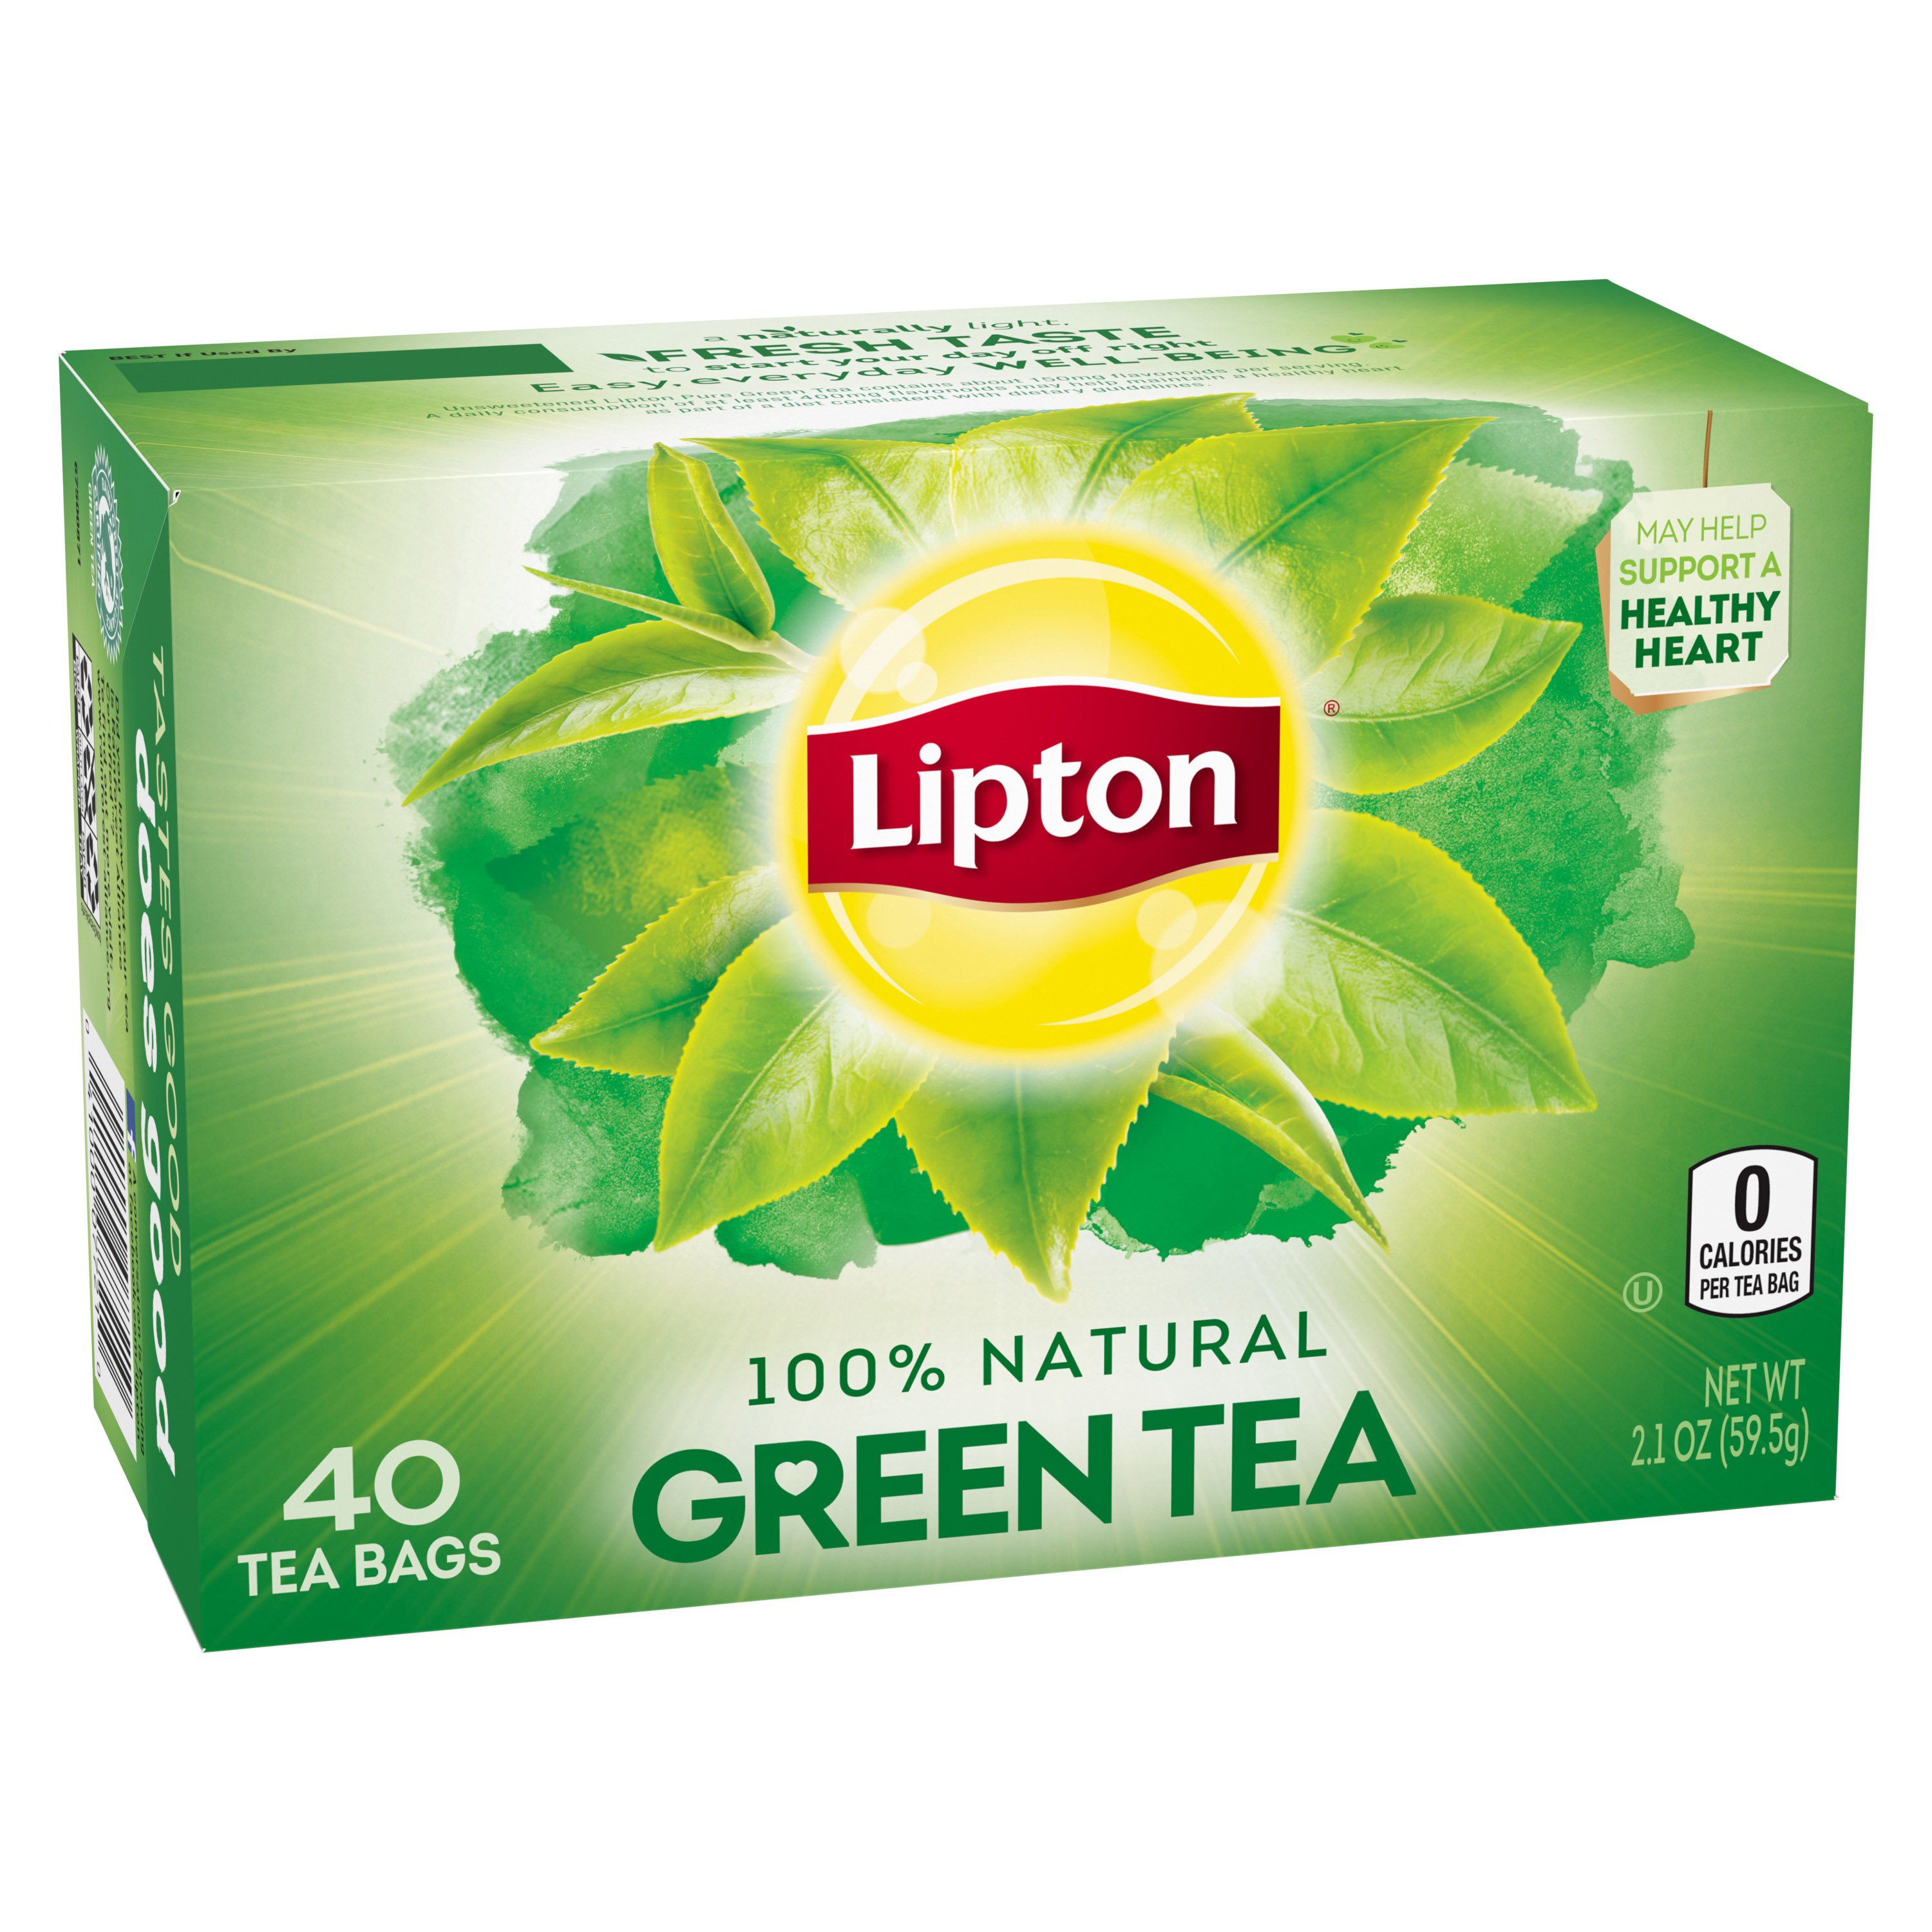 Картинки липтона. Липтон Green Tea. Липтон зеленый чай Липтон. Чай Липтон зеленый чай. Липтон зеленый чай 2 литра.